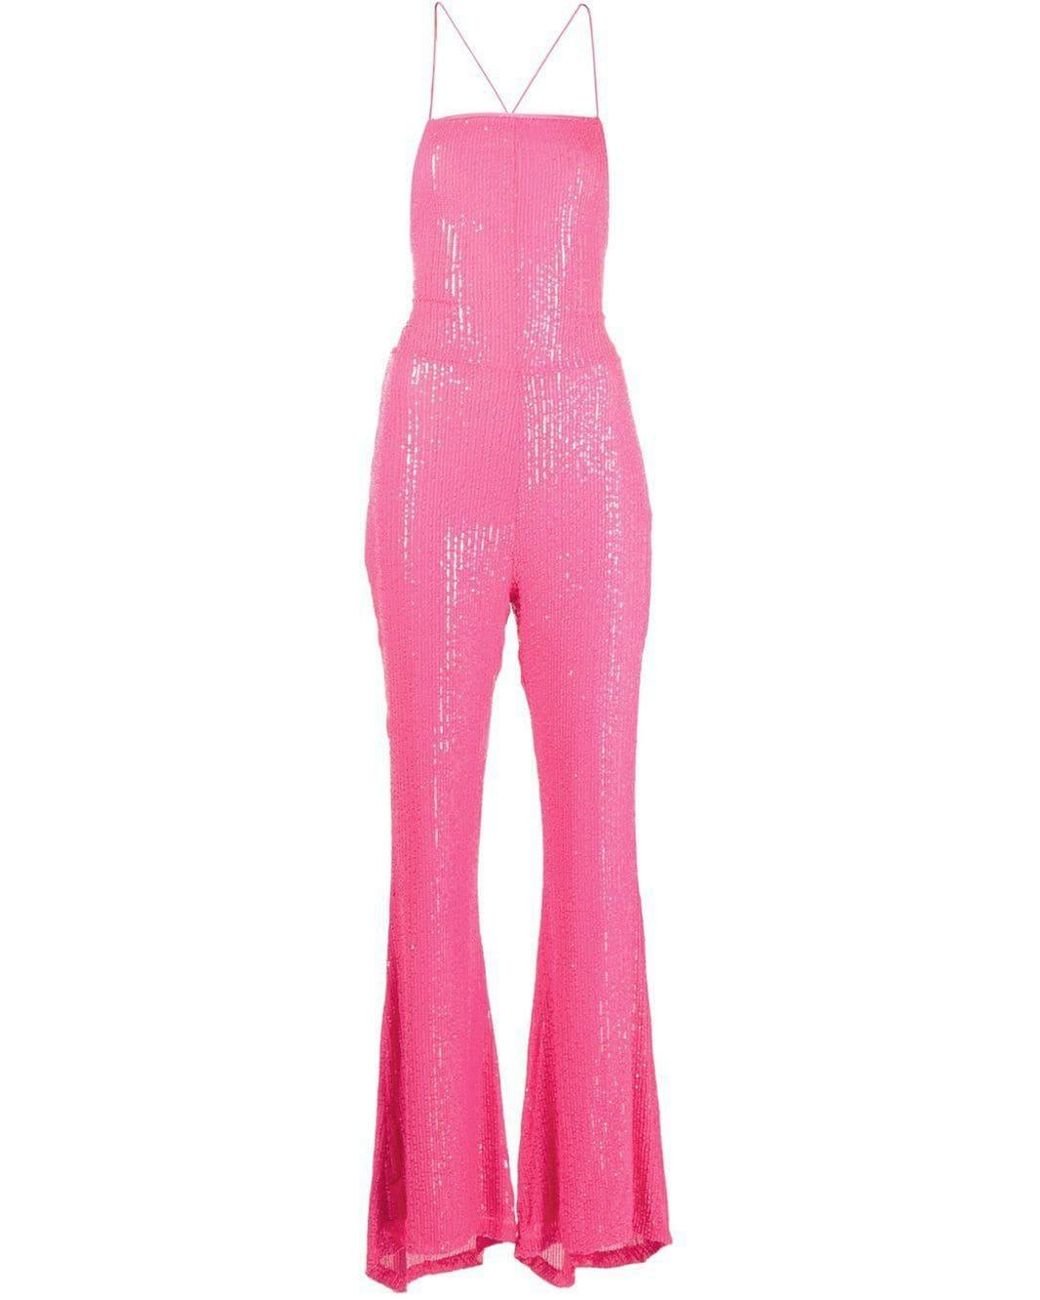 ROTATE BIRGER CHRISTENSEN Sequin-embellished Jumpsuit in Pink | Lyst